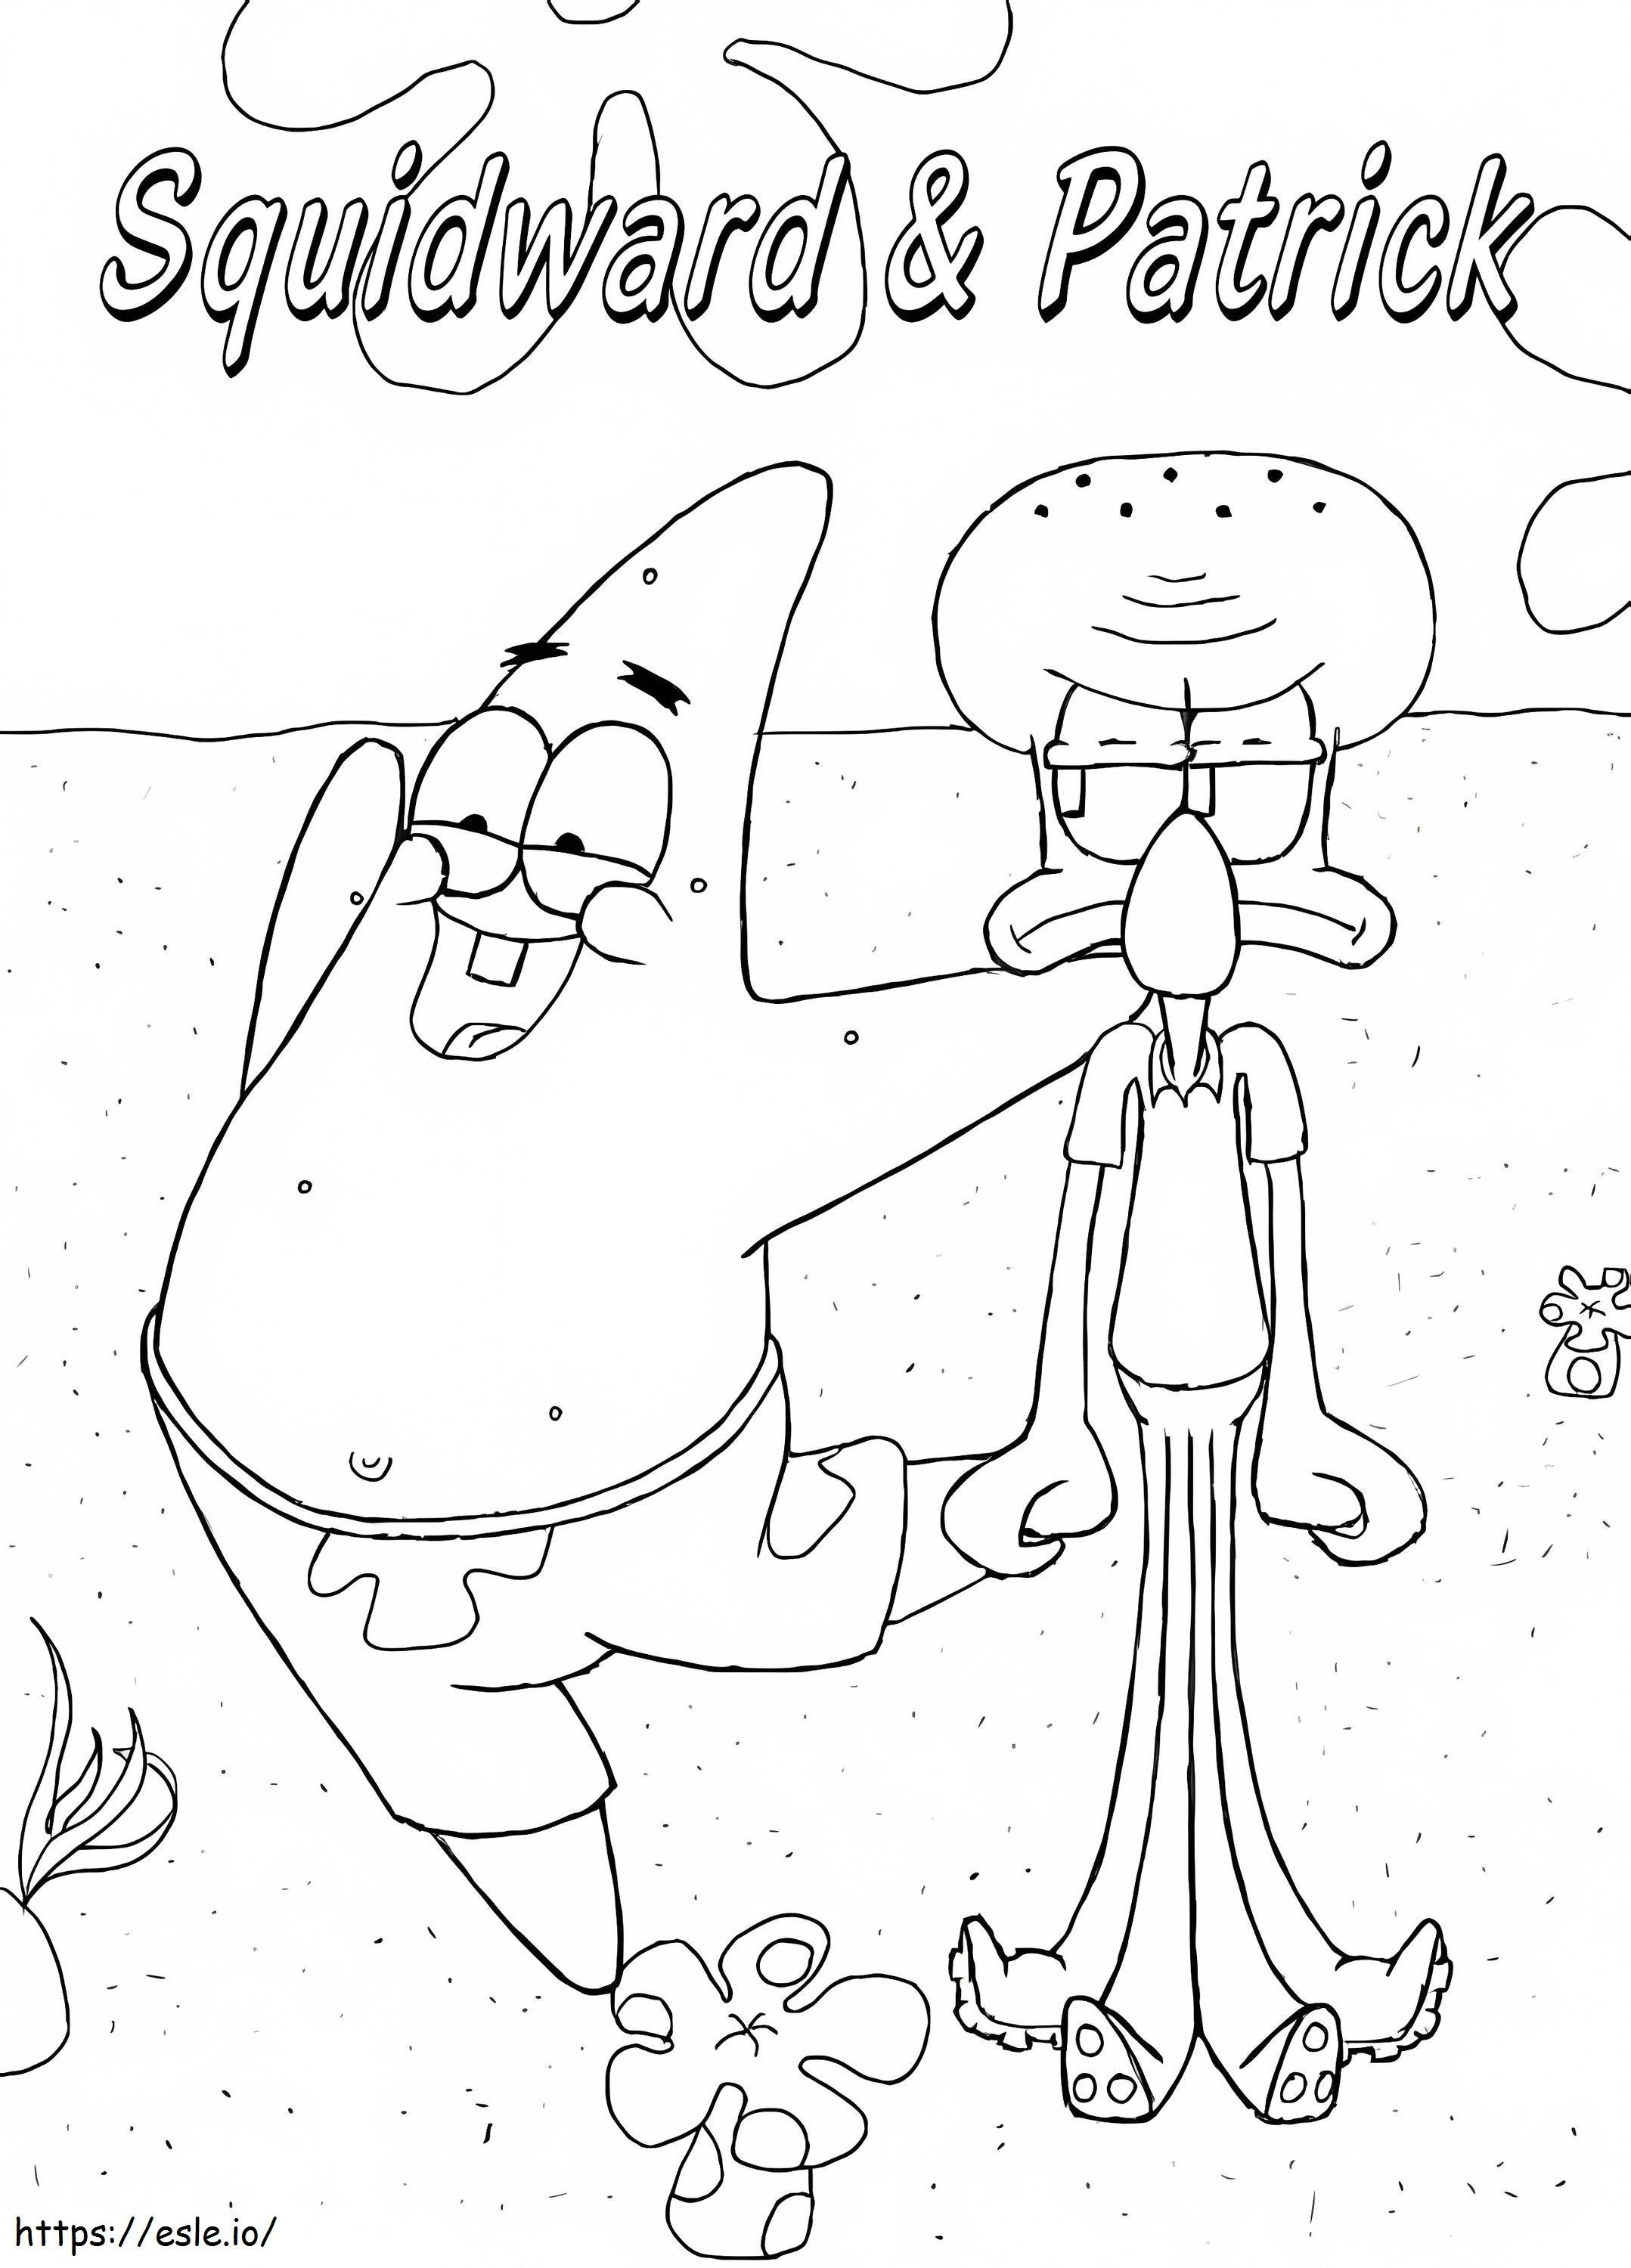 Patrick Squidward coloring page